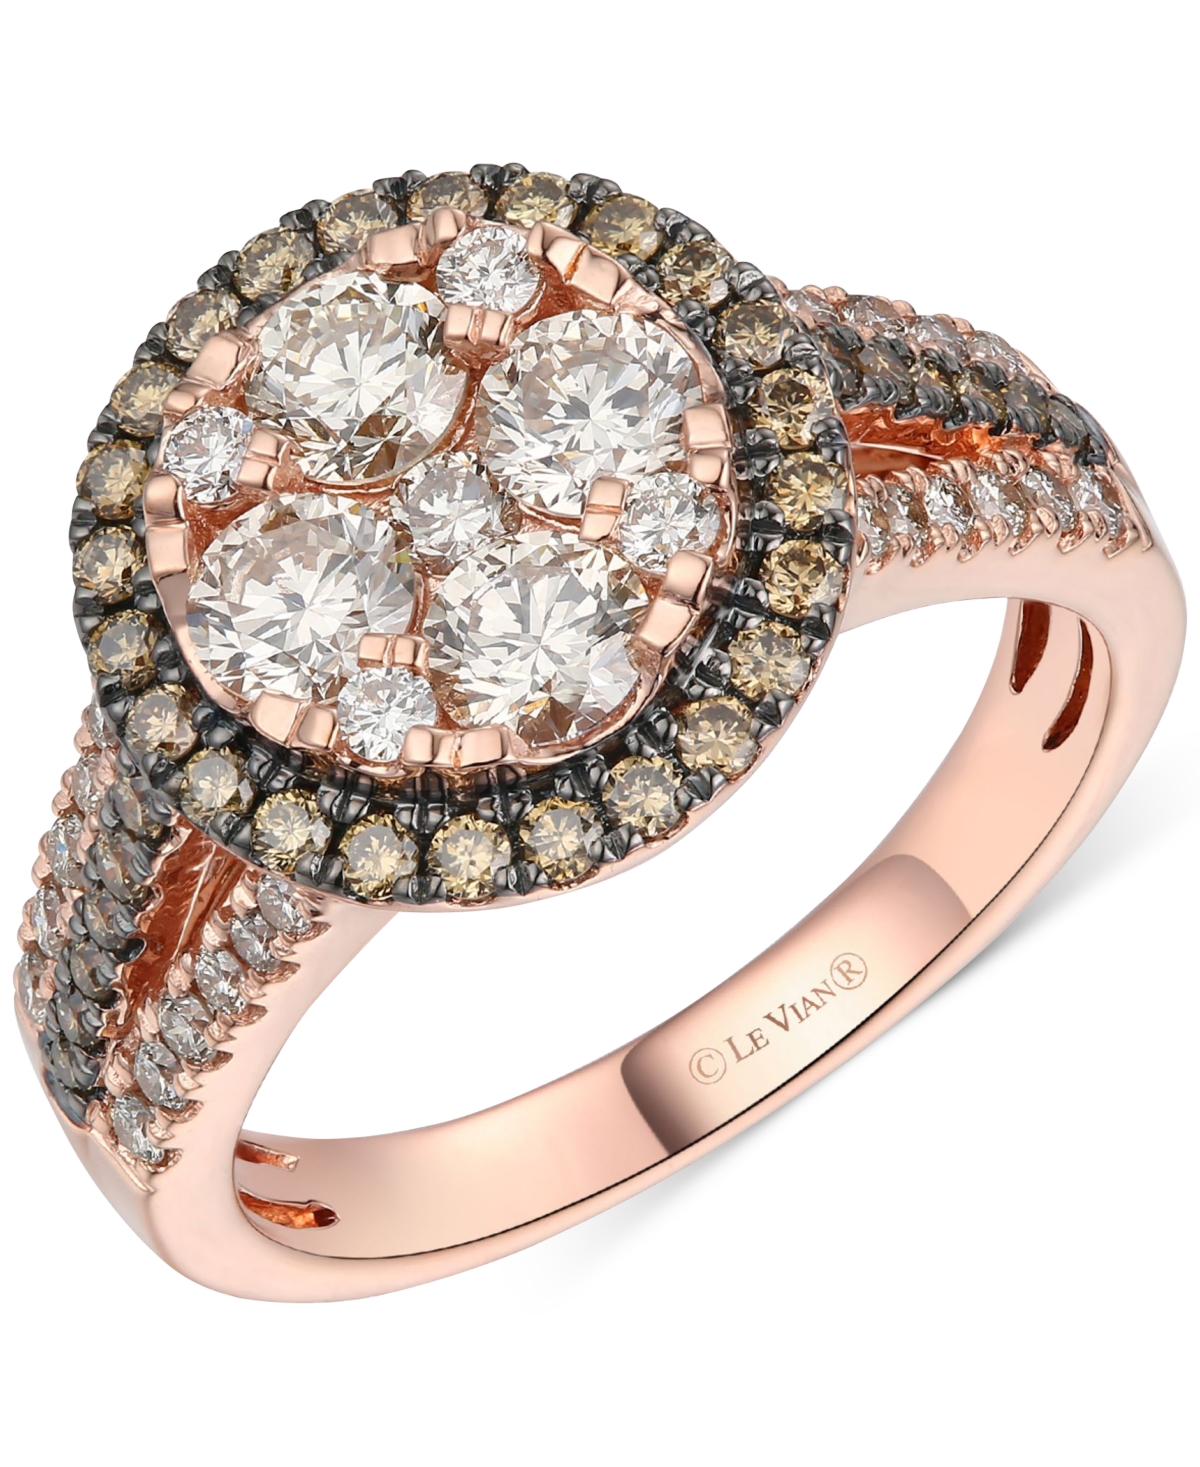 Chocolate Diamond & Nude Diamond Halo Cluster Ring (1-5/8 ct. t.w.) in 14k Rose Gold